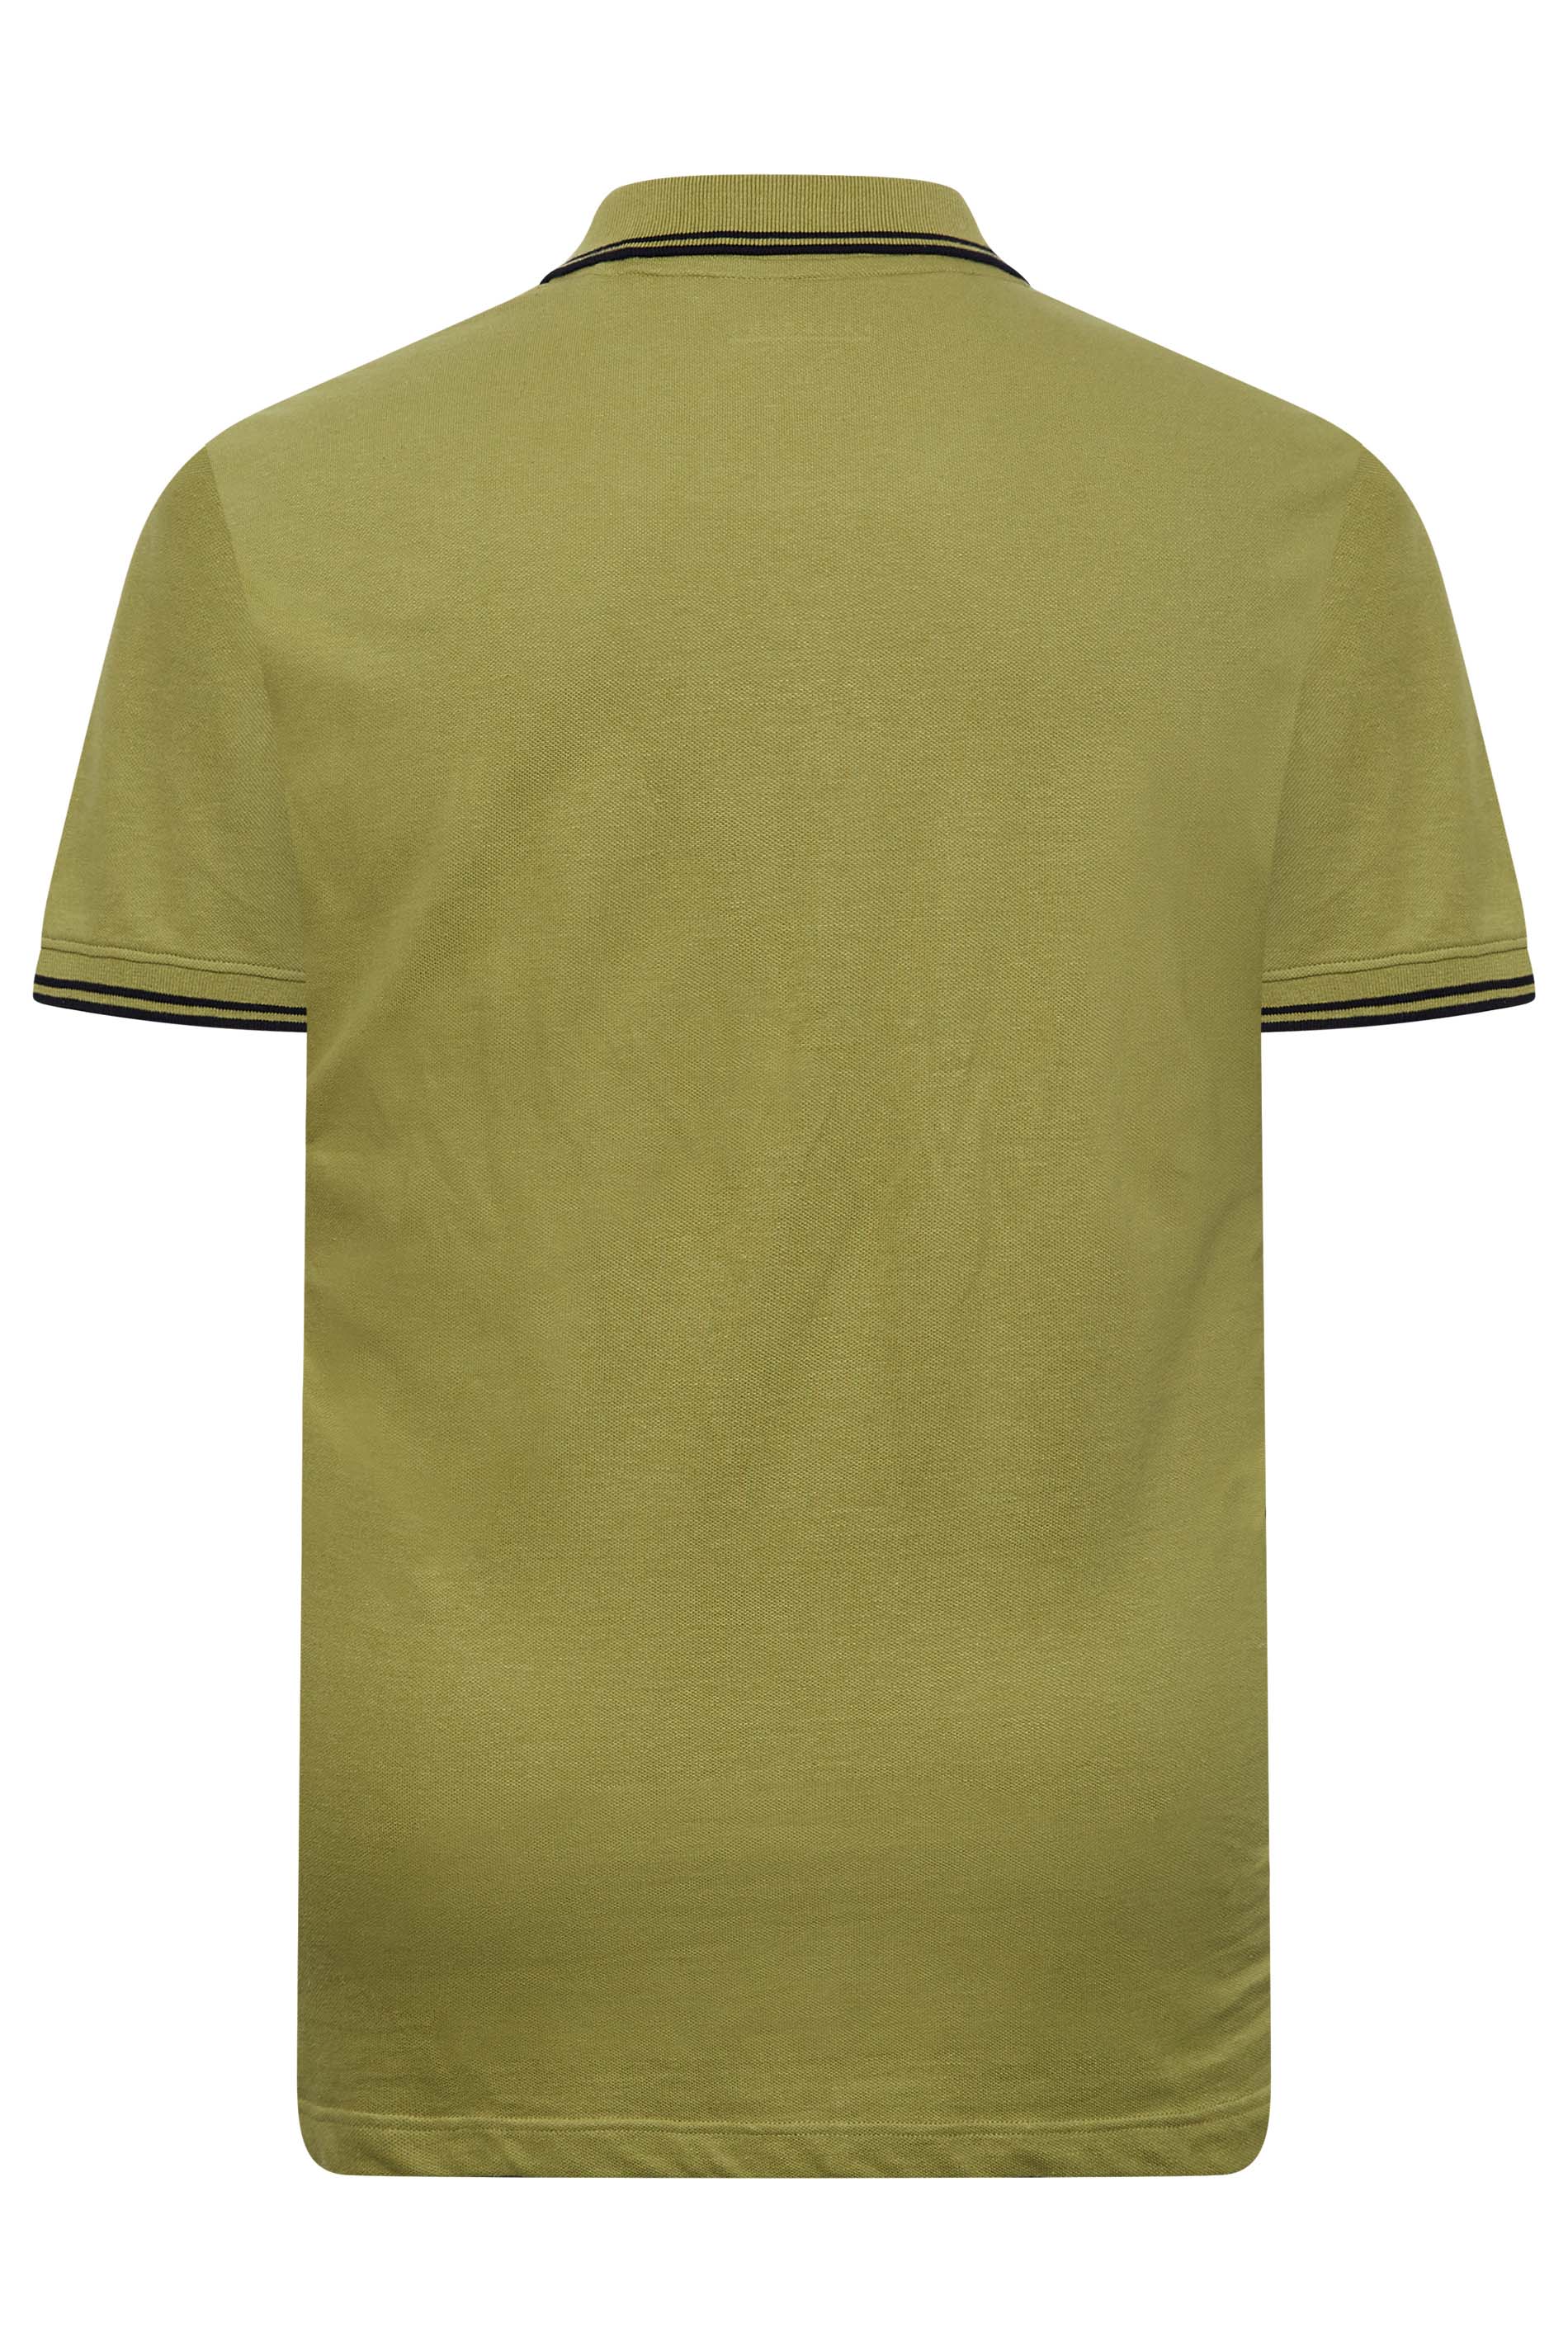 BadRhino Sage Green Essential Tipped Polo Shirt | BadRhino